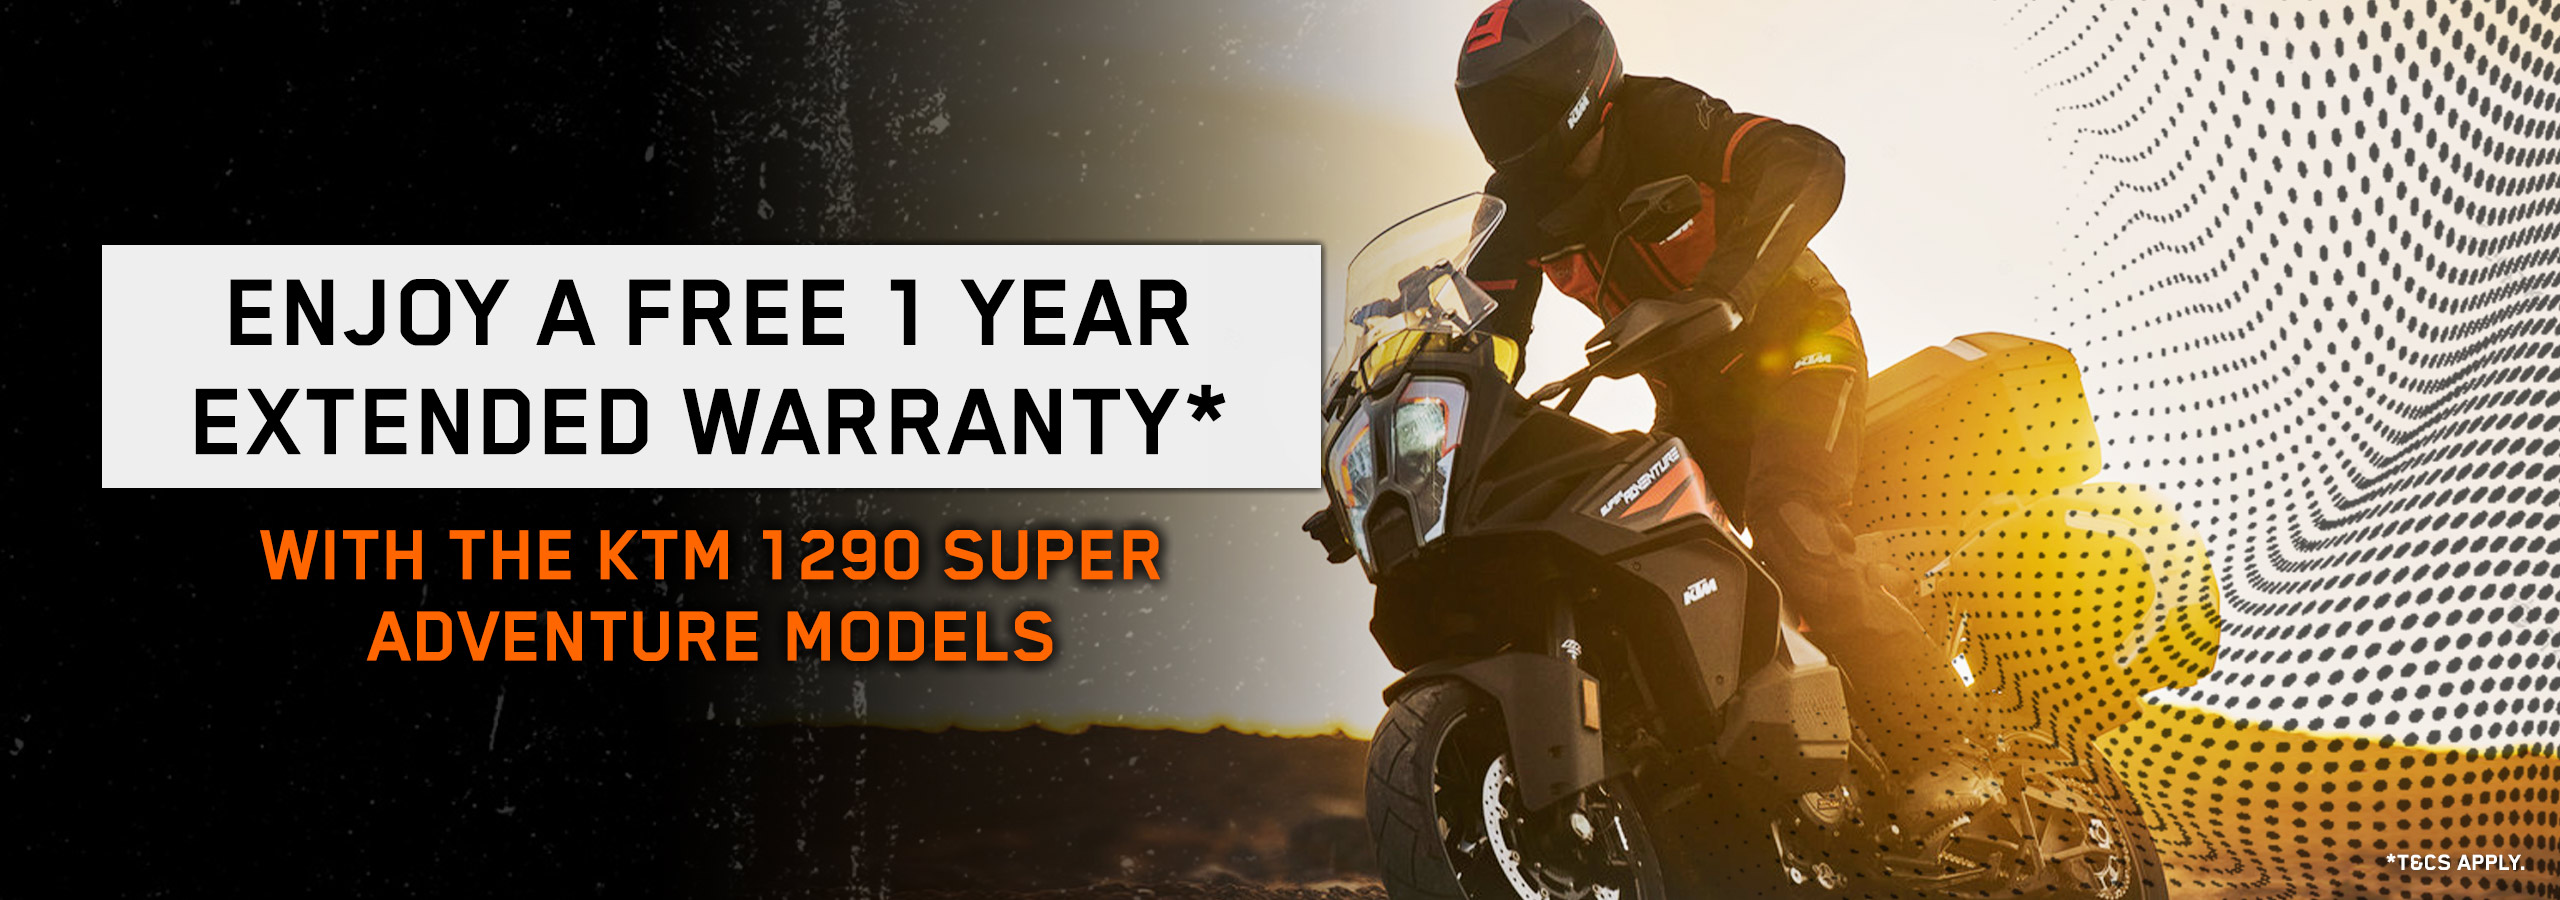 New KTM 1290 Super Adventure offer